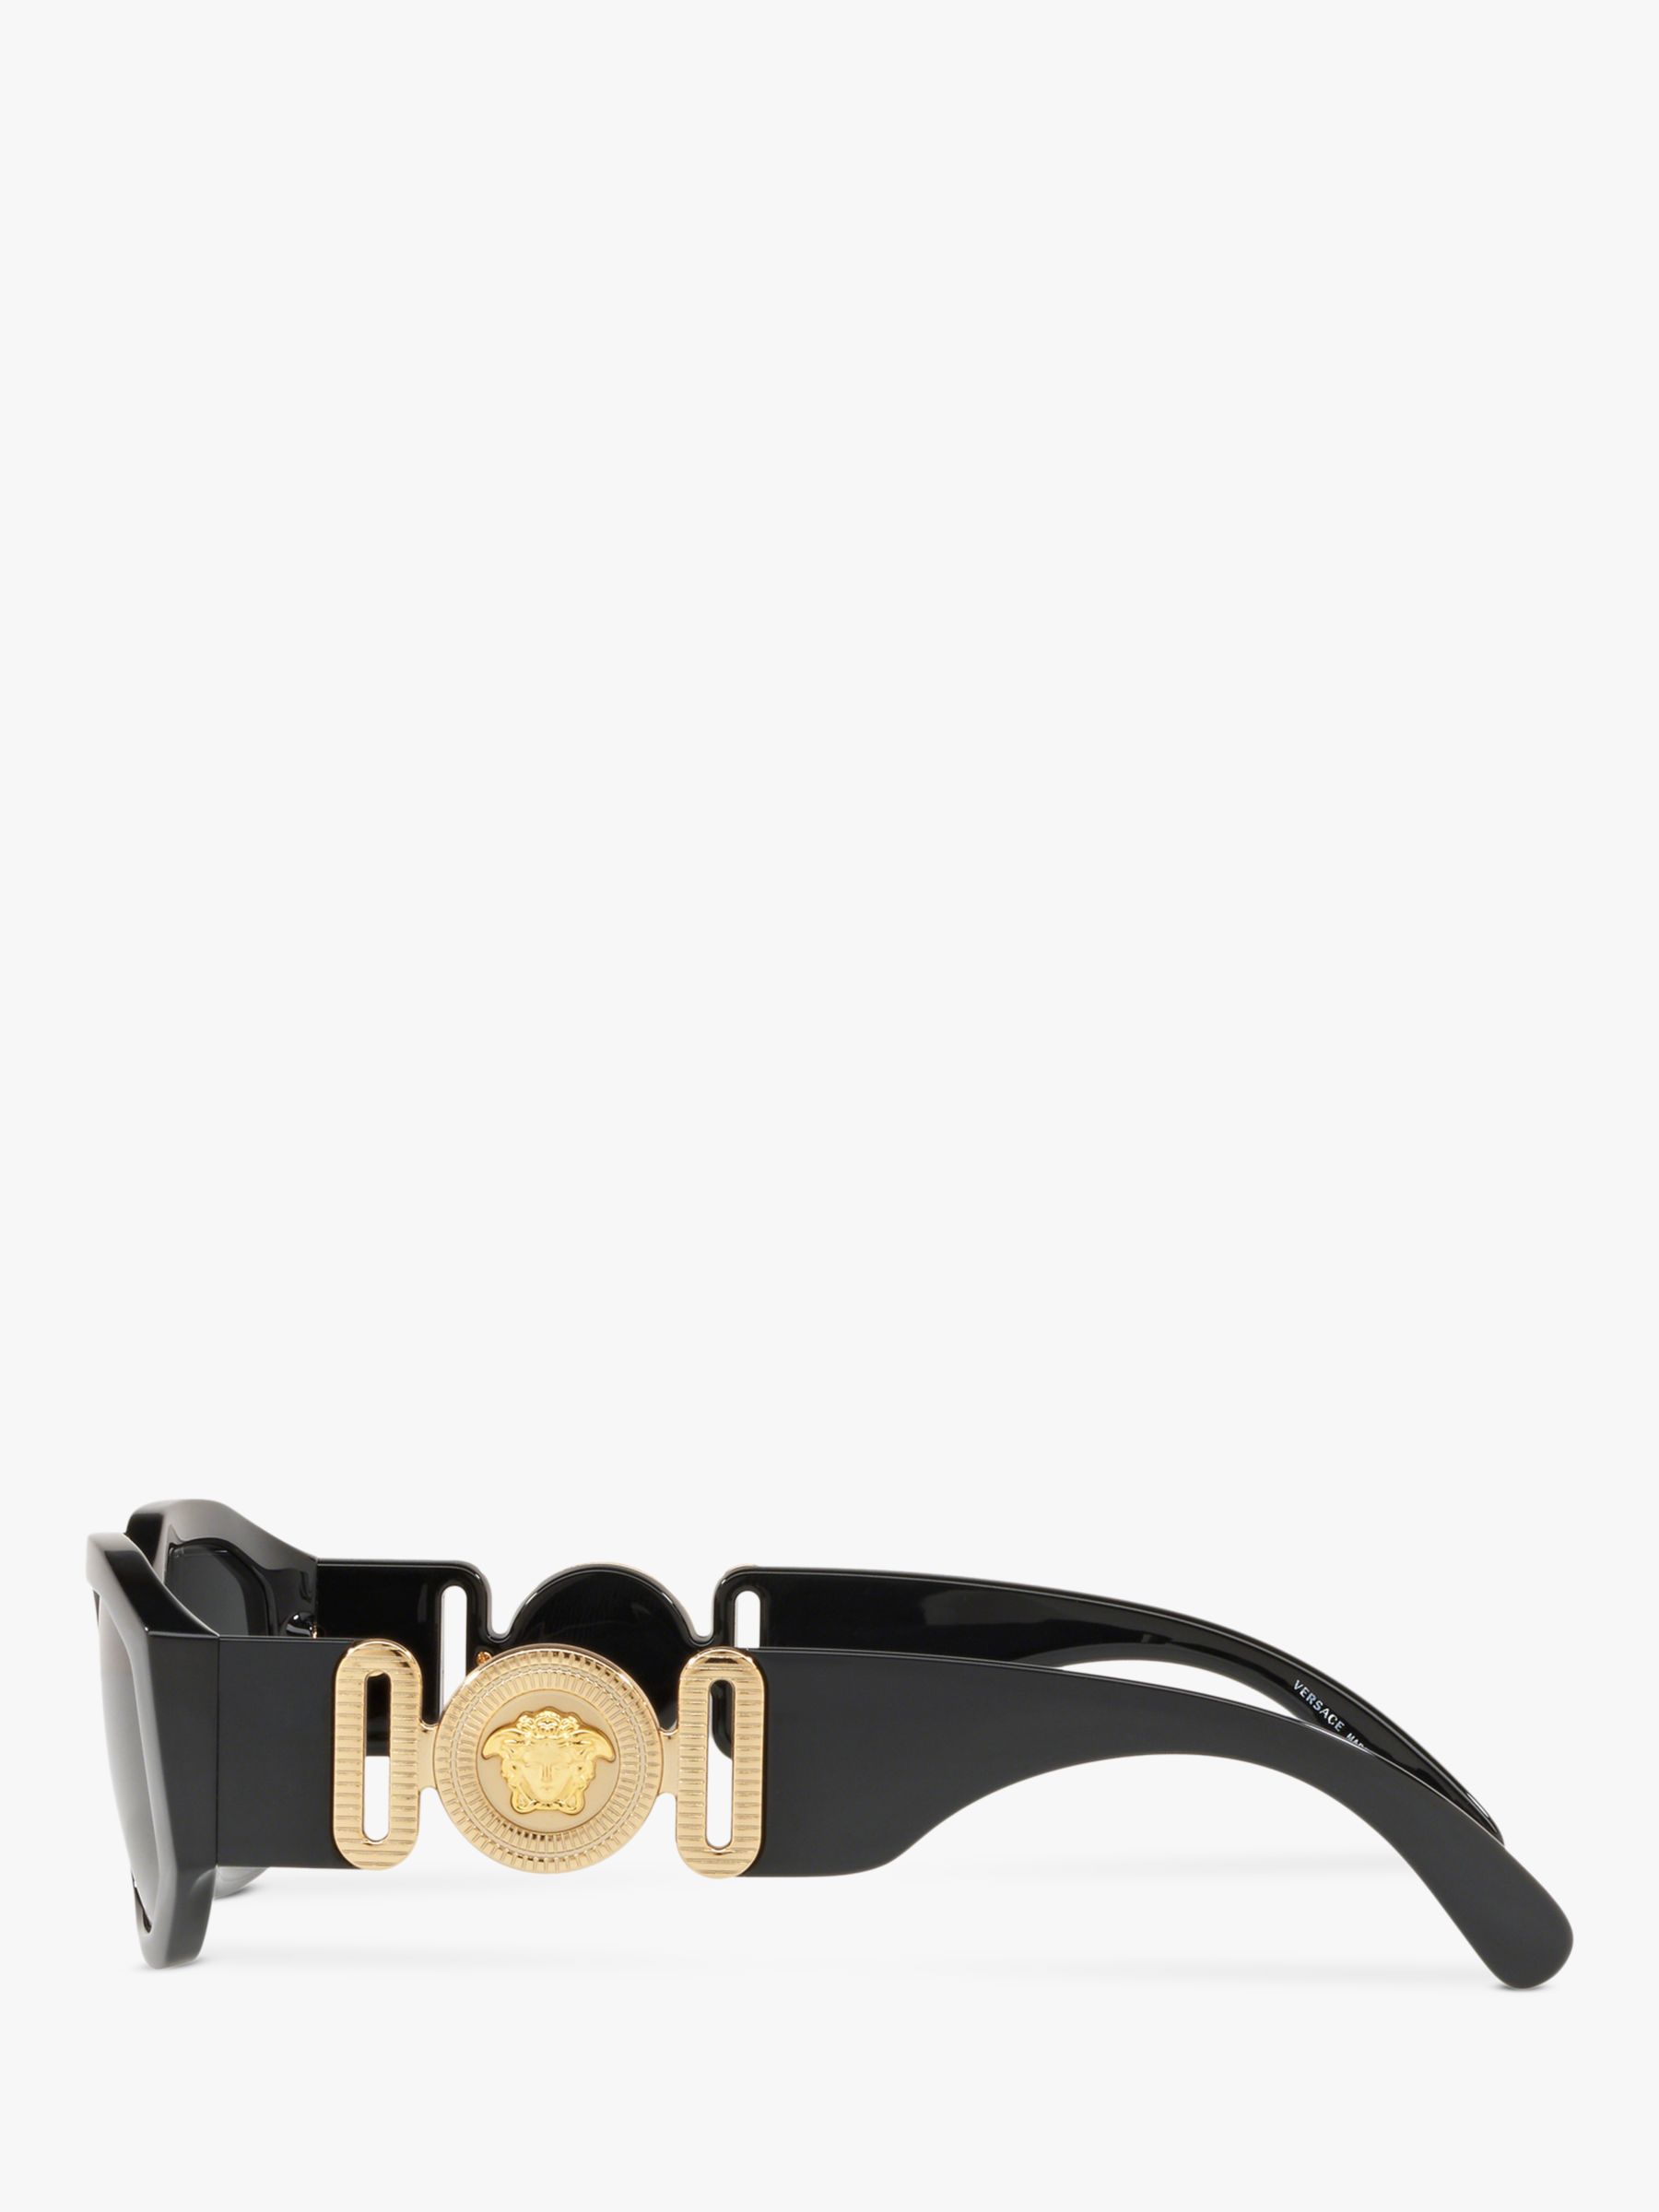 Versace VE4361 Women's Square Sunglasses, Black/Grey